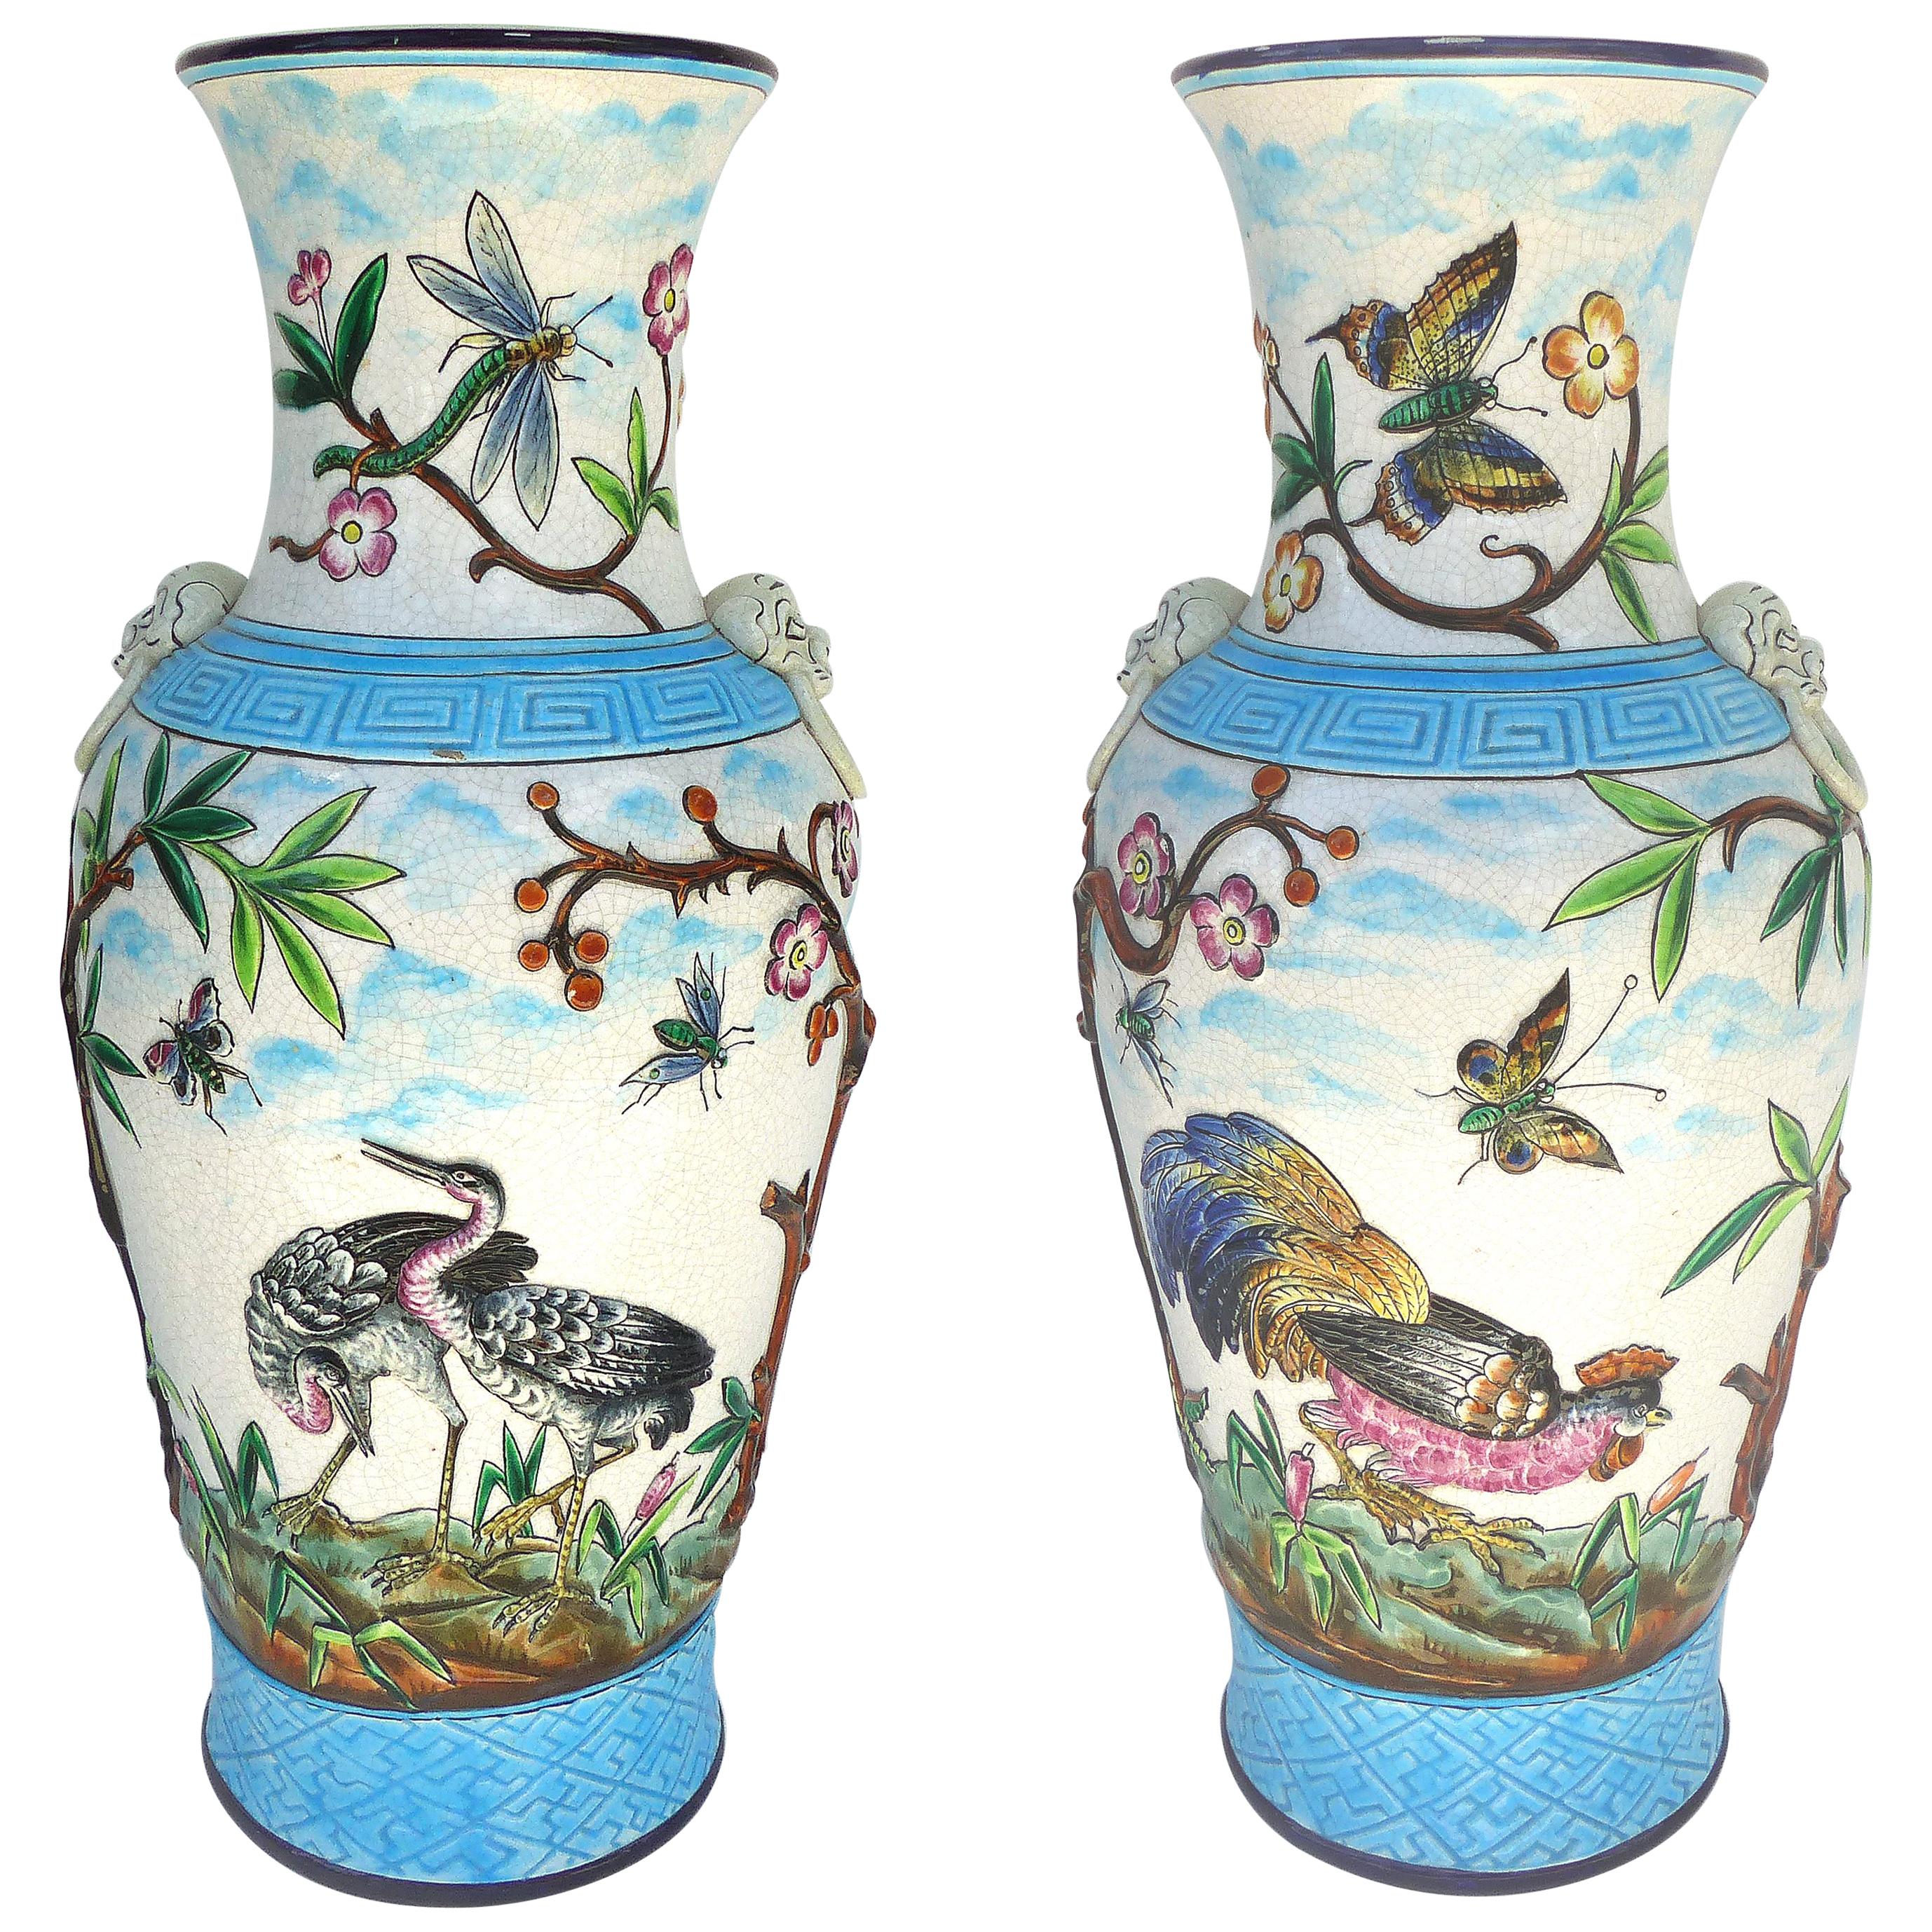 Longwy Enamel Vases in High Relief, circa 1885